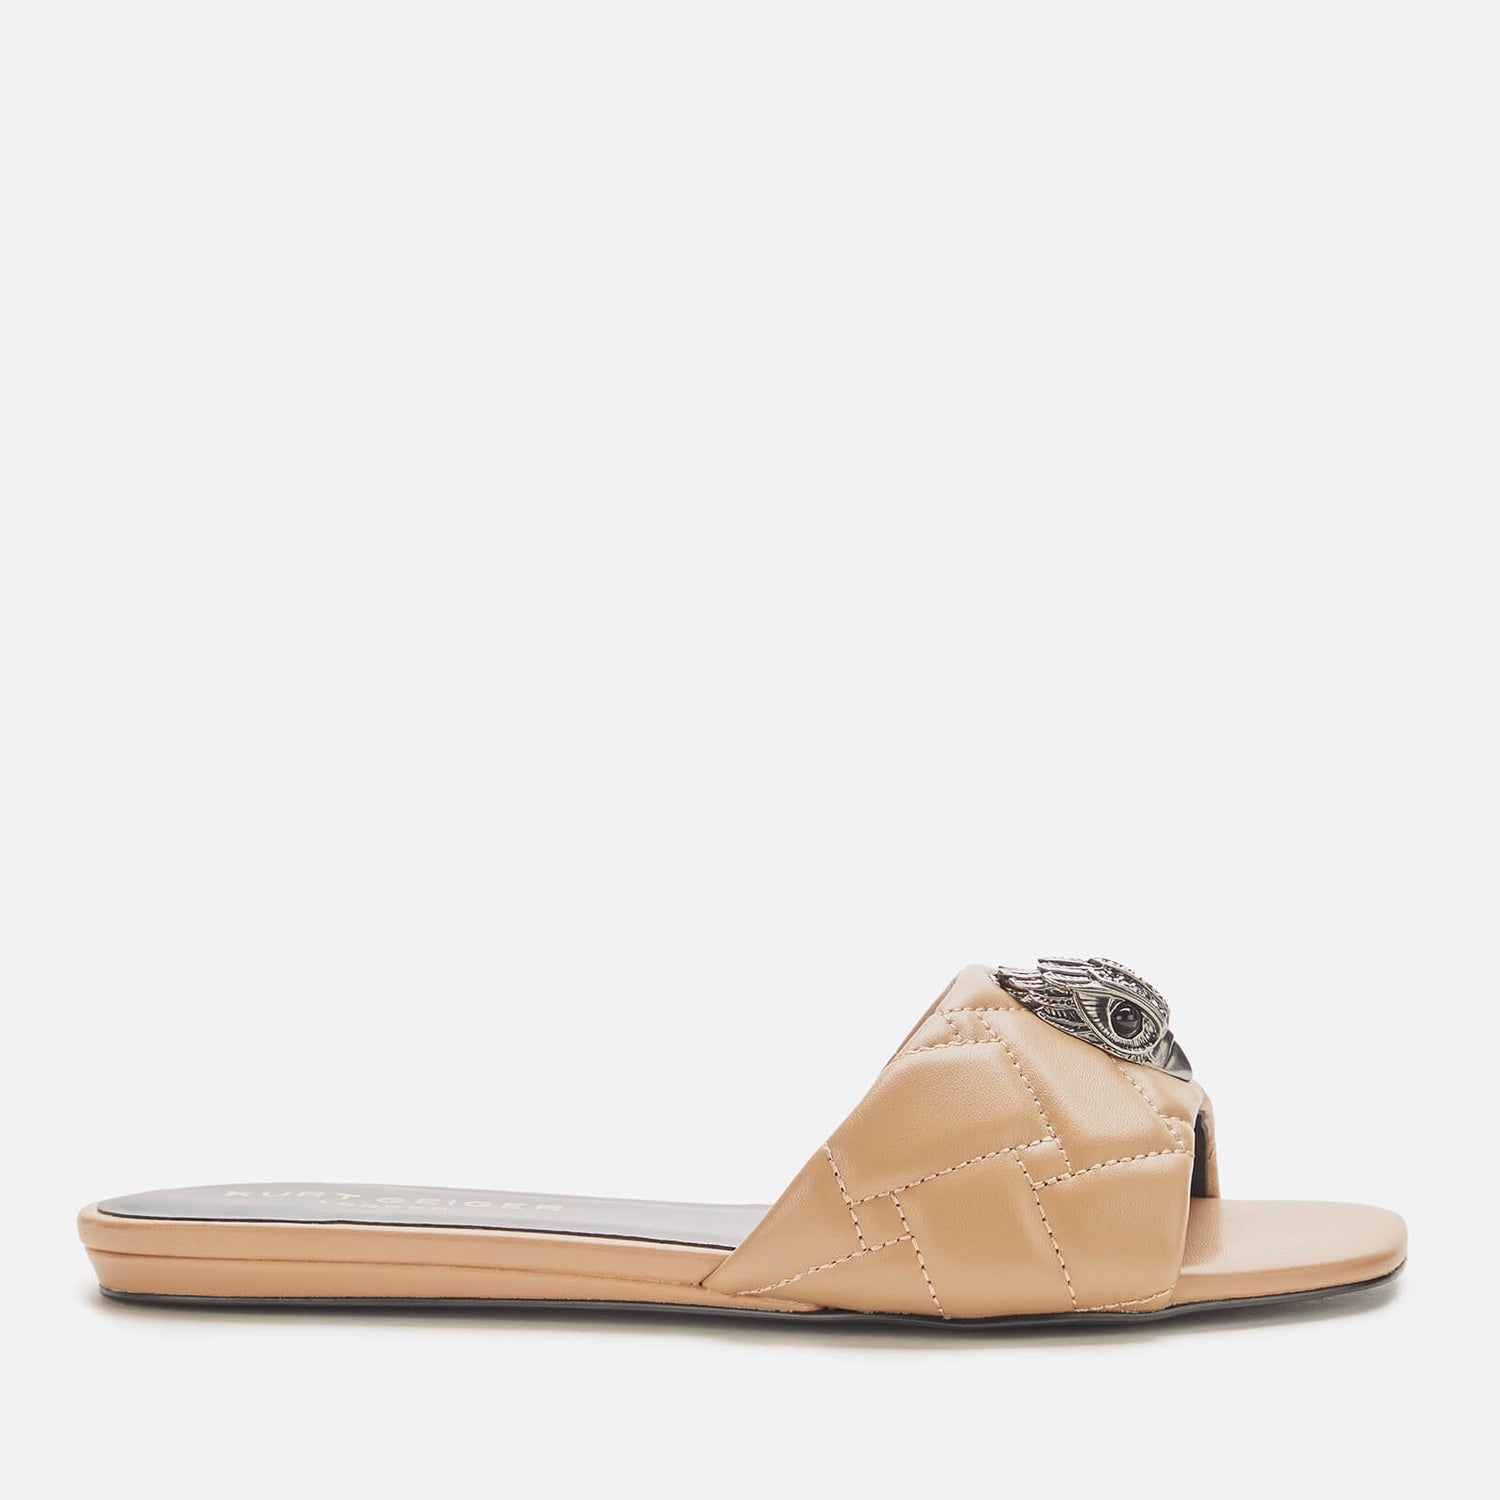 Kurt Geiger London Women's Kensington Leather Flat Sandals - Camel - UK 3